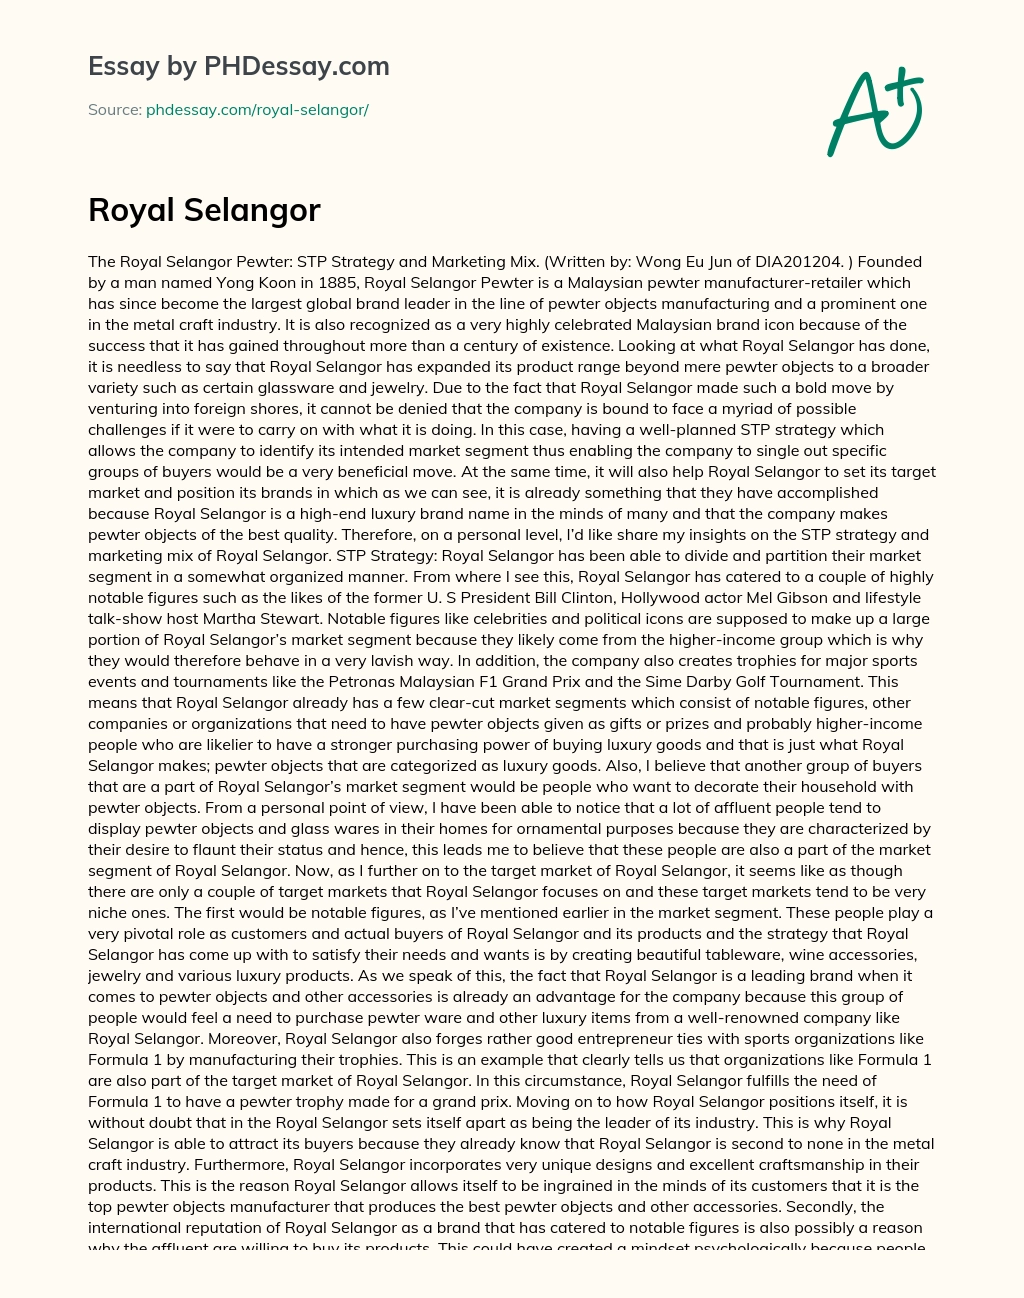 Royal Selangor essay